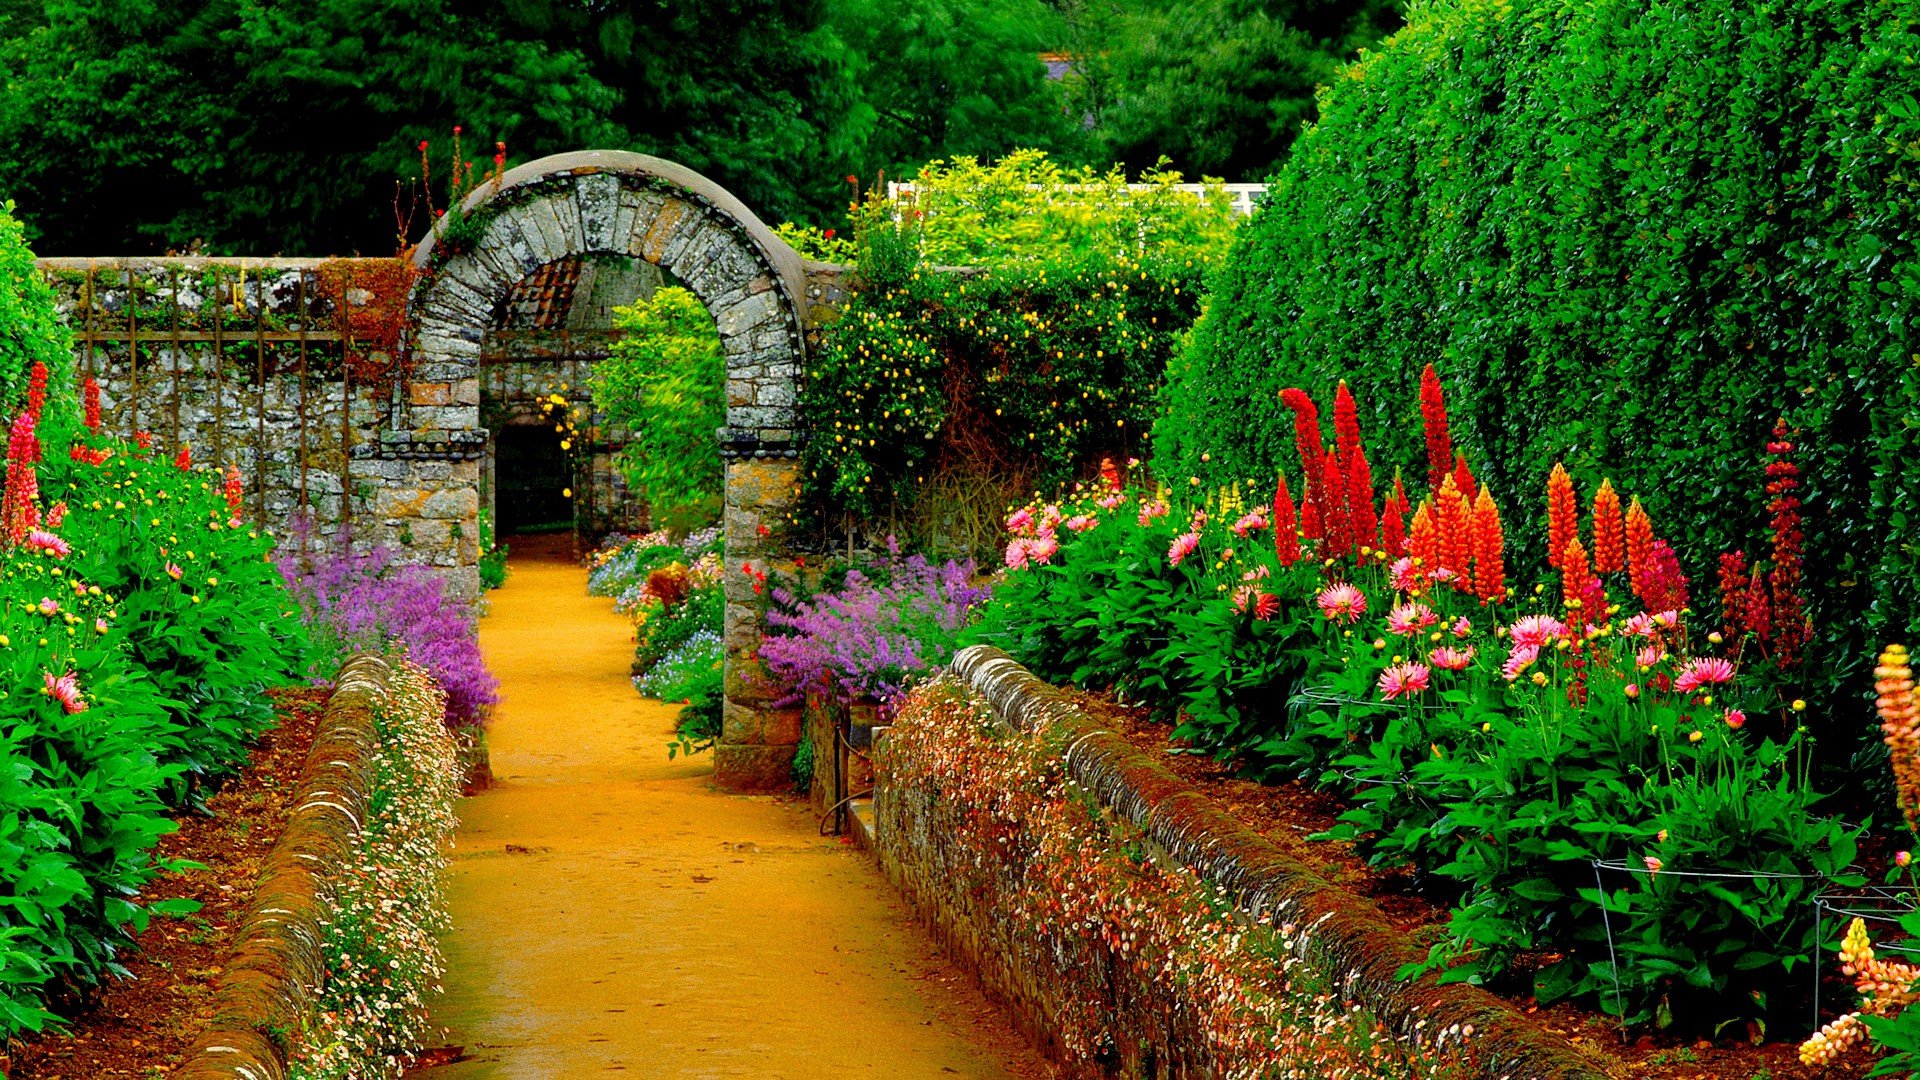 100000 Best Flower Garden Images  Wallpapers  100 Free Download   Pexels  Free Stock Photos